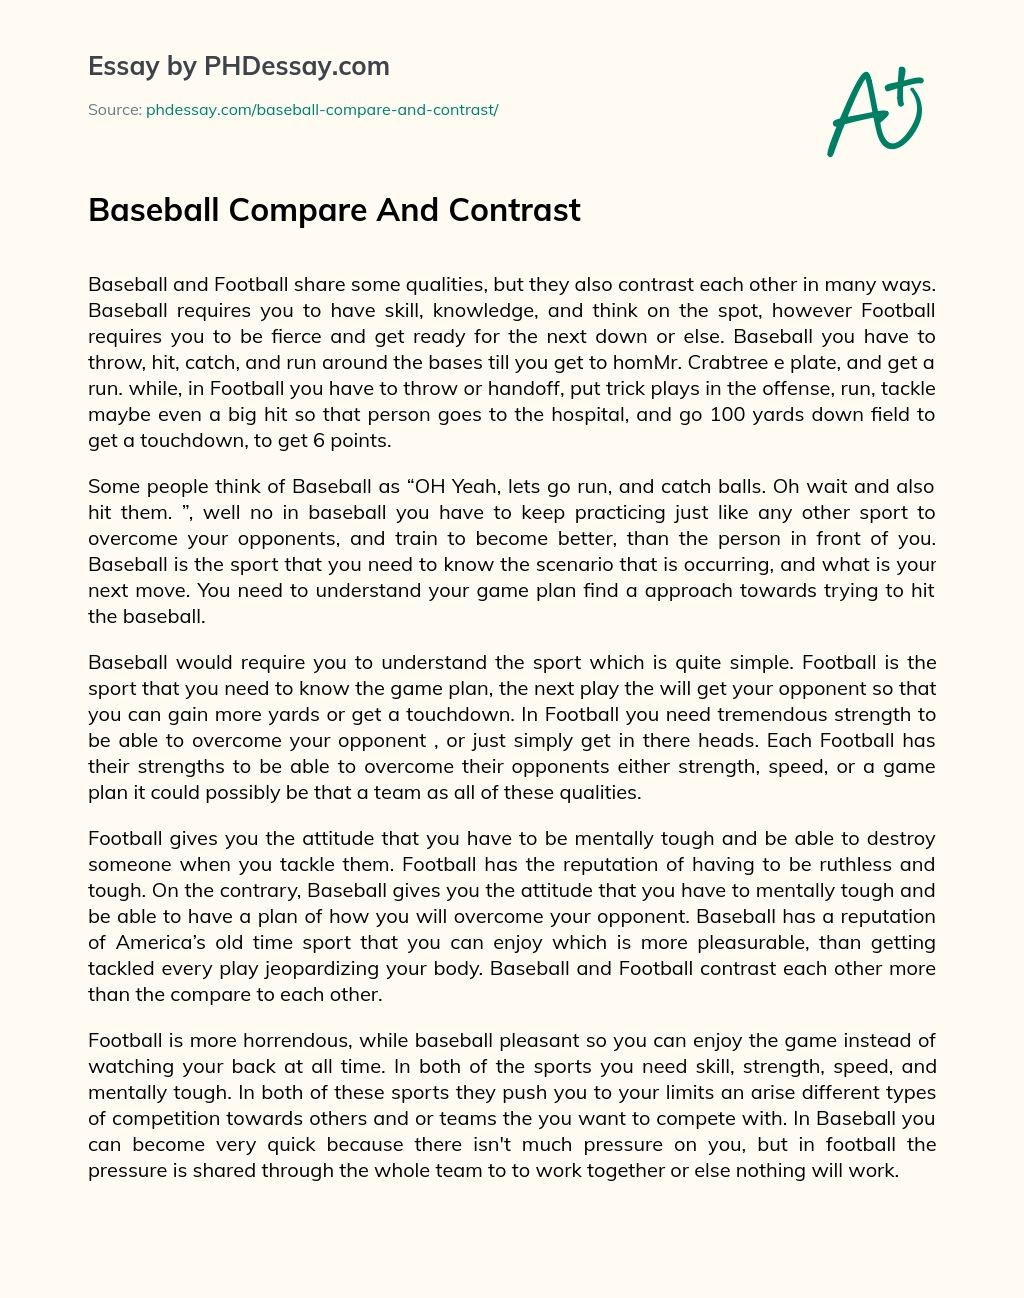 Baseball Compare And Contrast essay